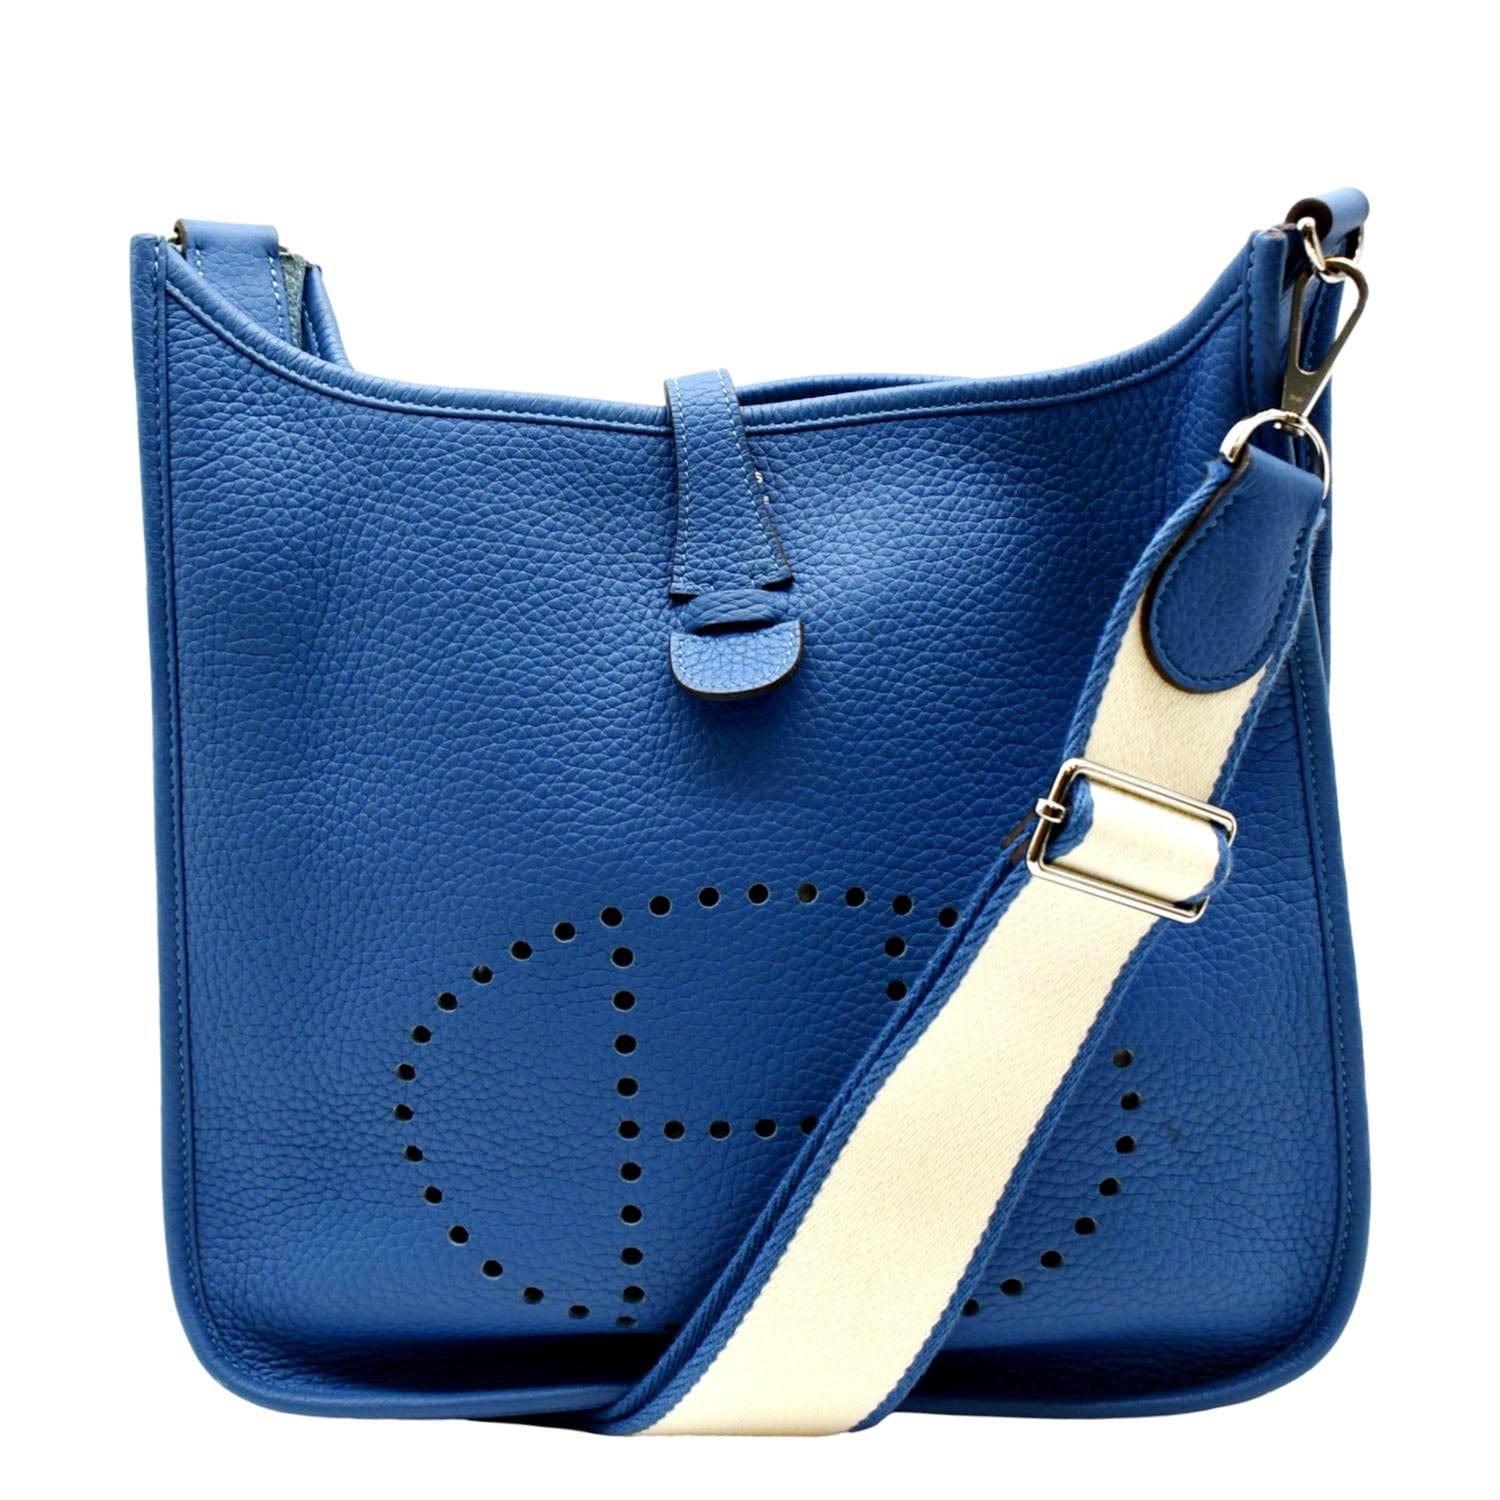 Cordeliere Hermes Birkin 35 cm handbag in navy blue epsom leather